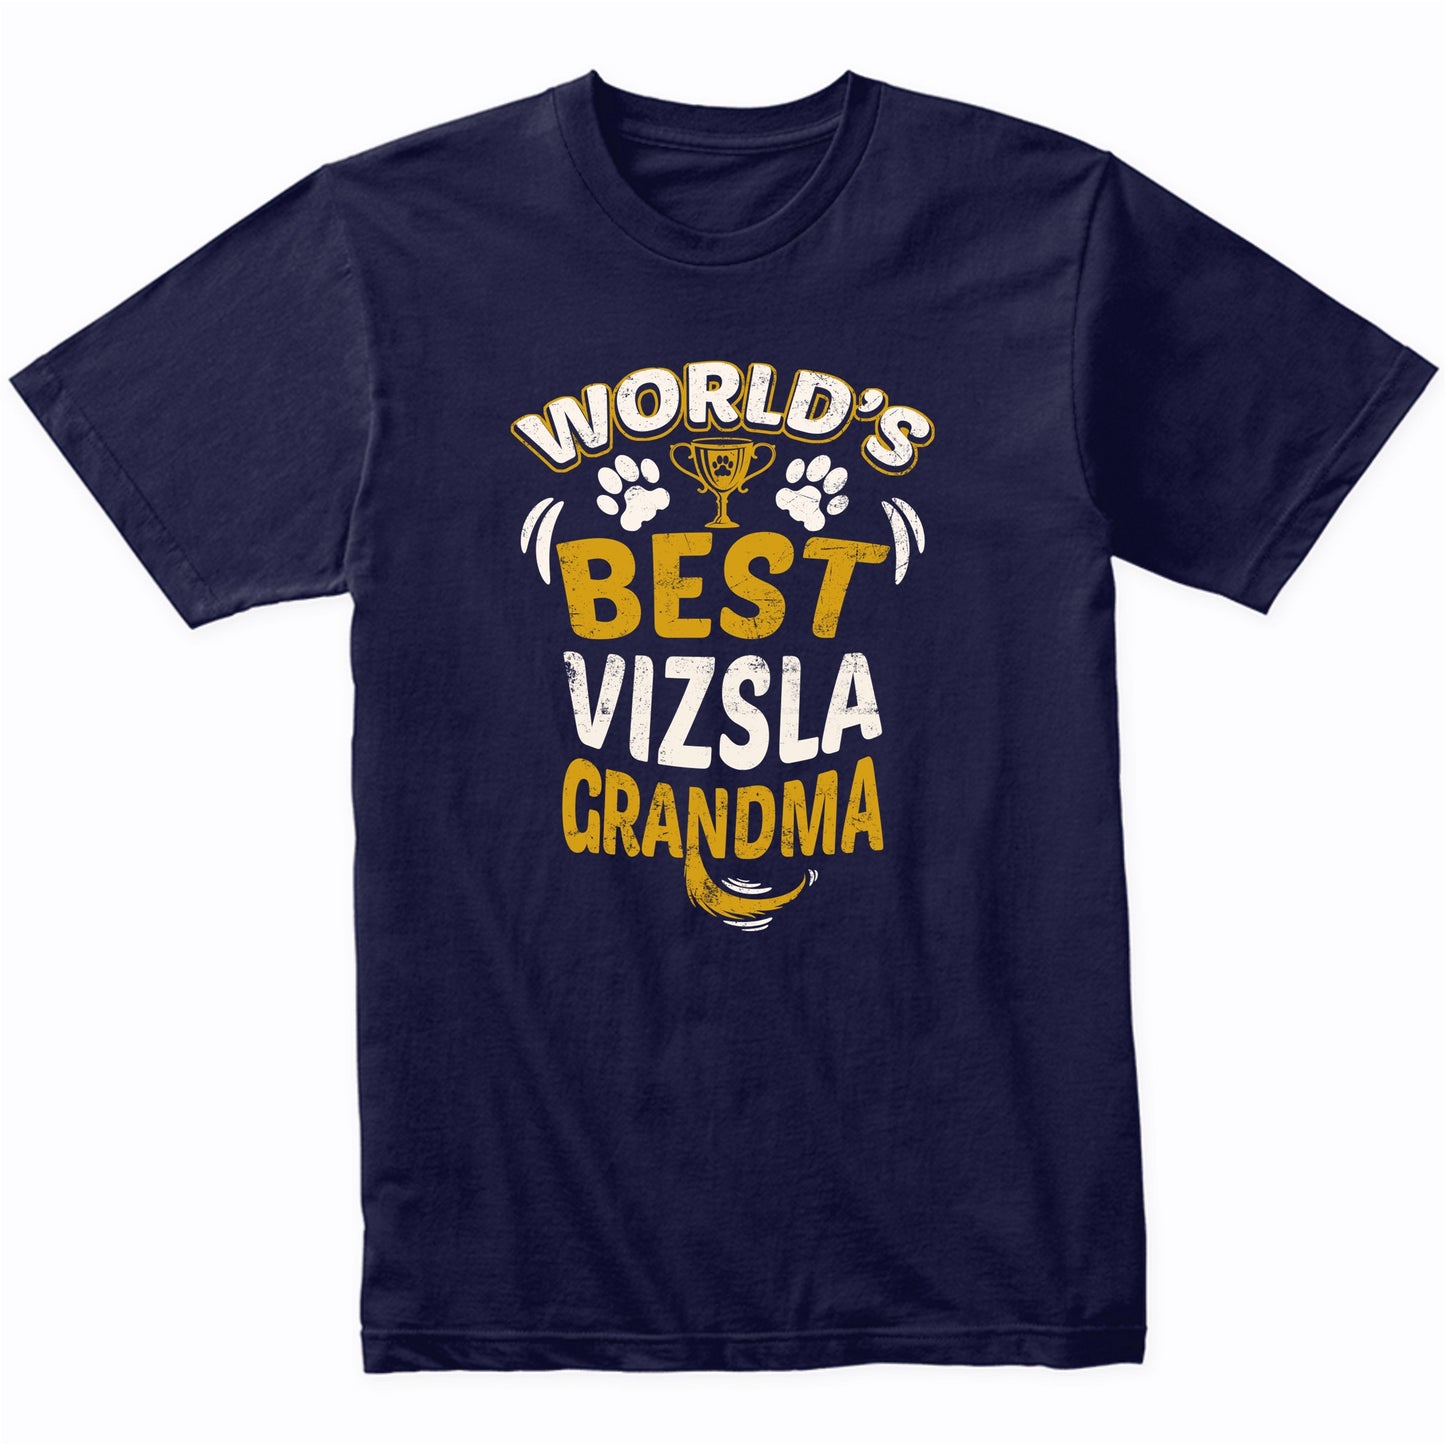 World's Best Vizsla Grandma Graphic T-Shirt